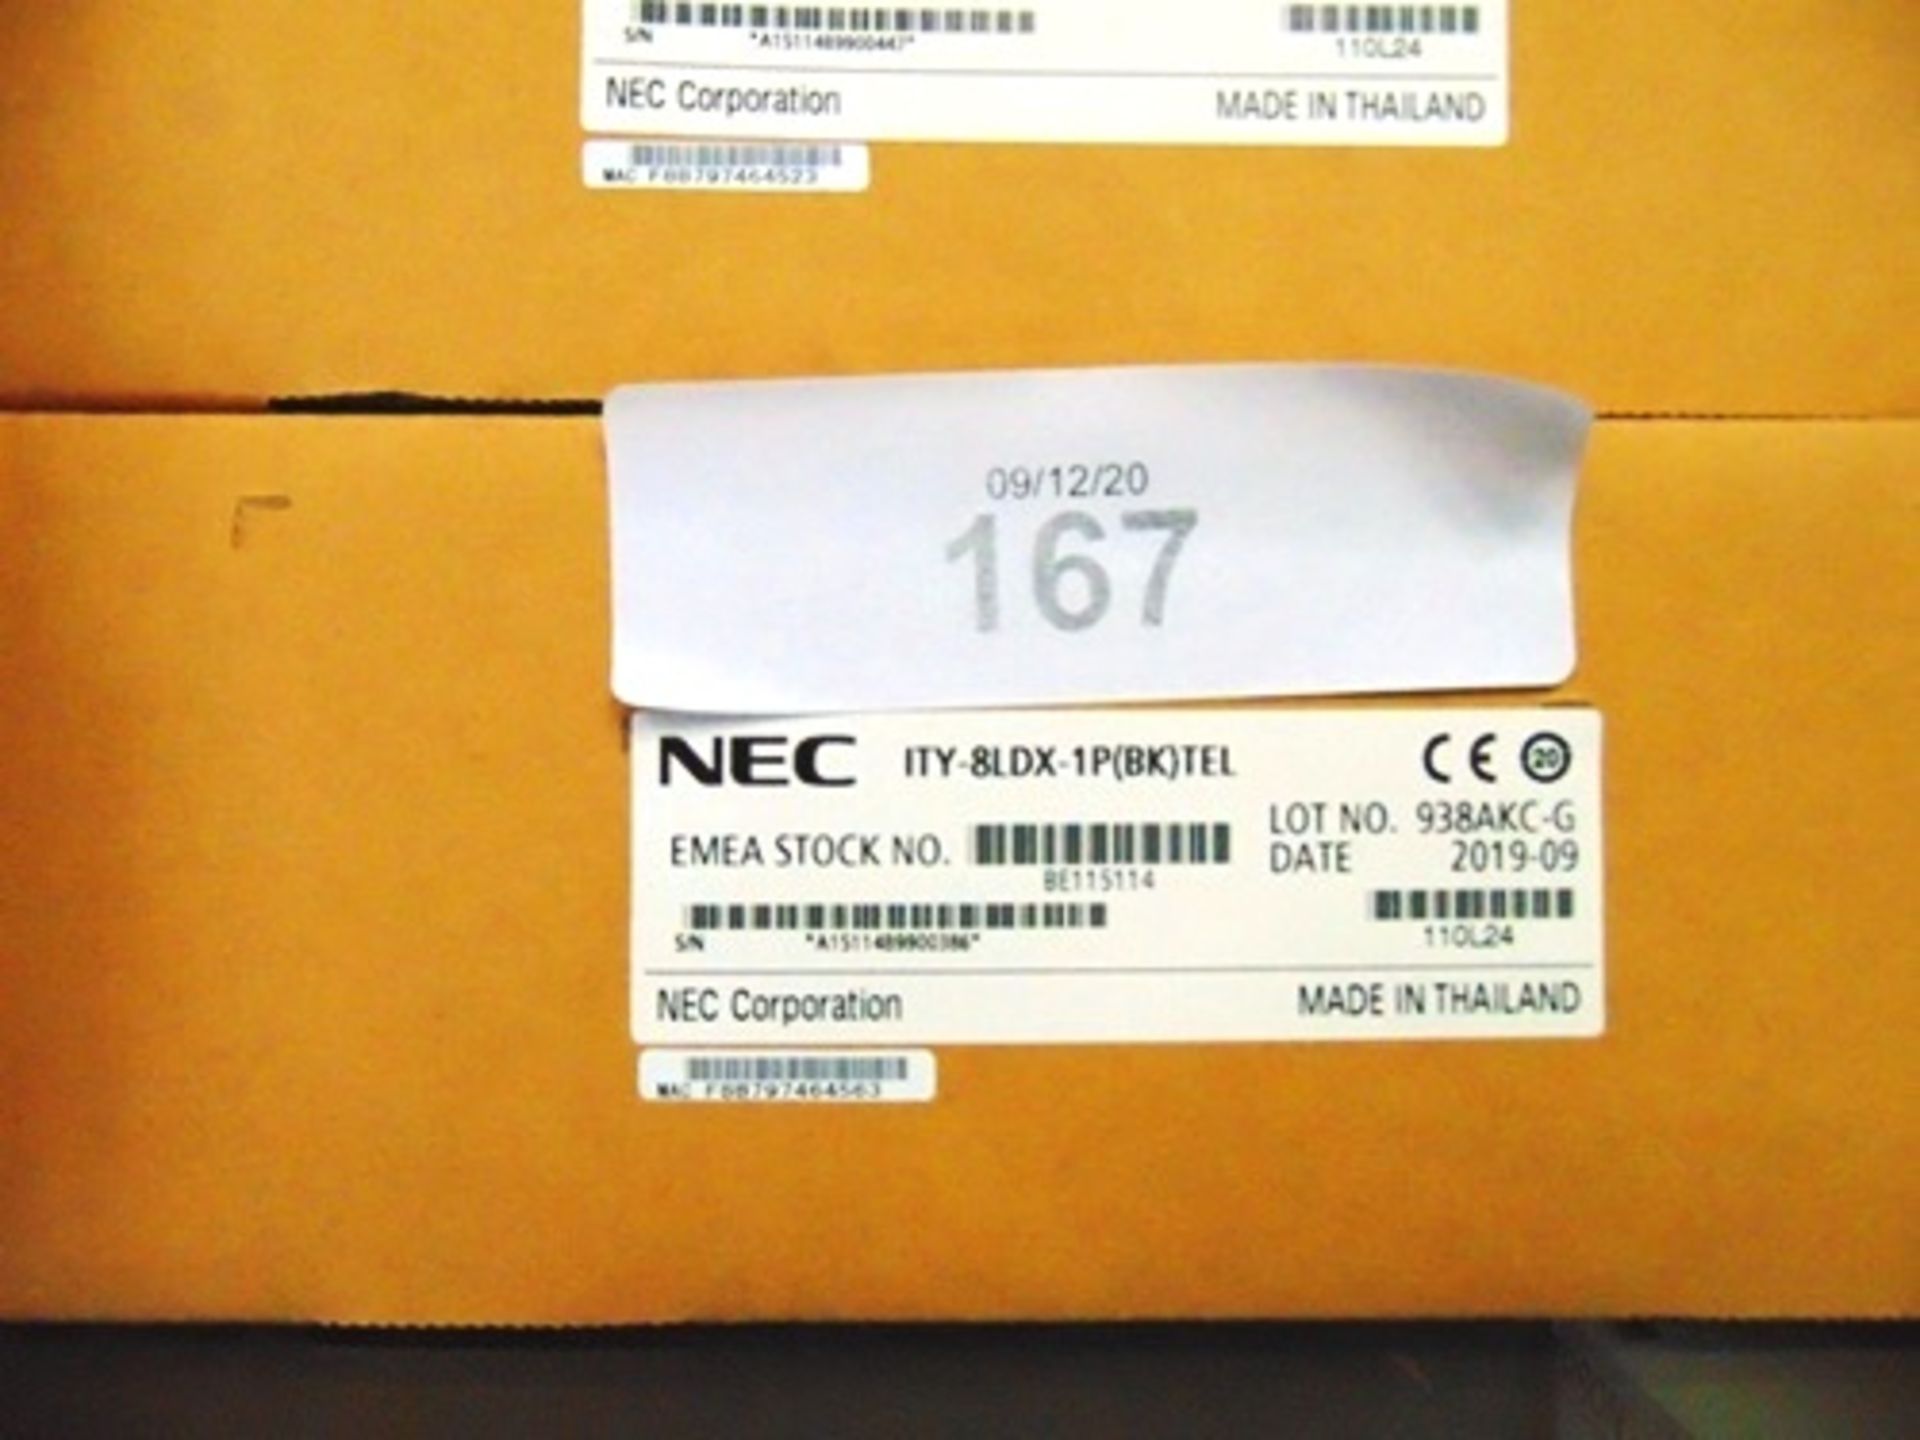 8 x NEC office telephones, model ITY-8LDX-1P(BK)TEL - New in box (C4) - Image 2 of 2